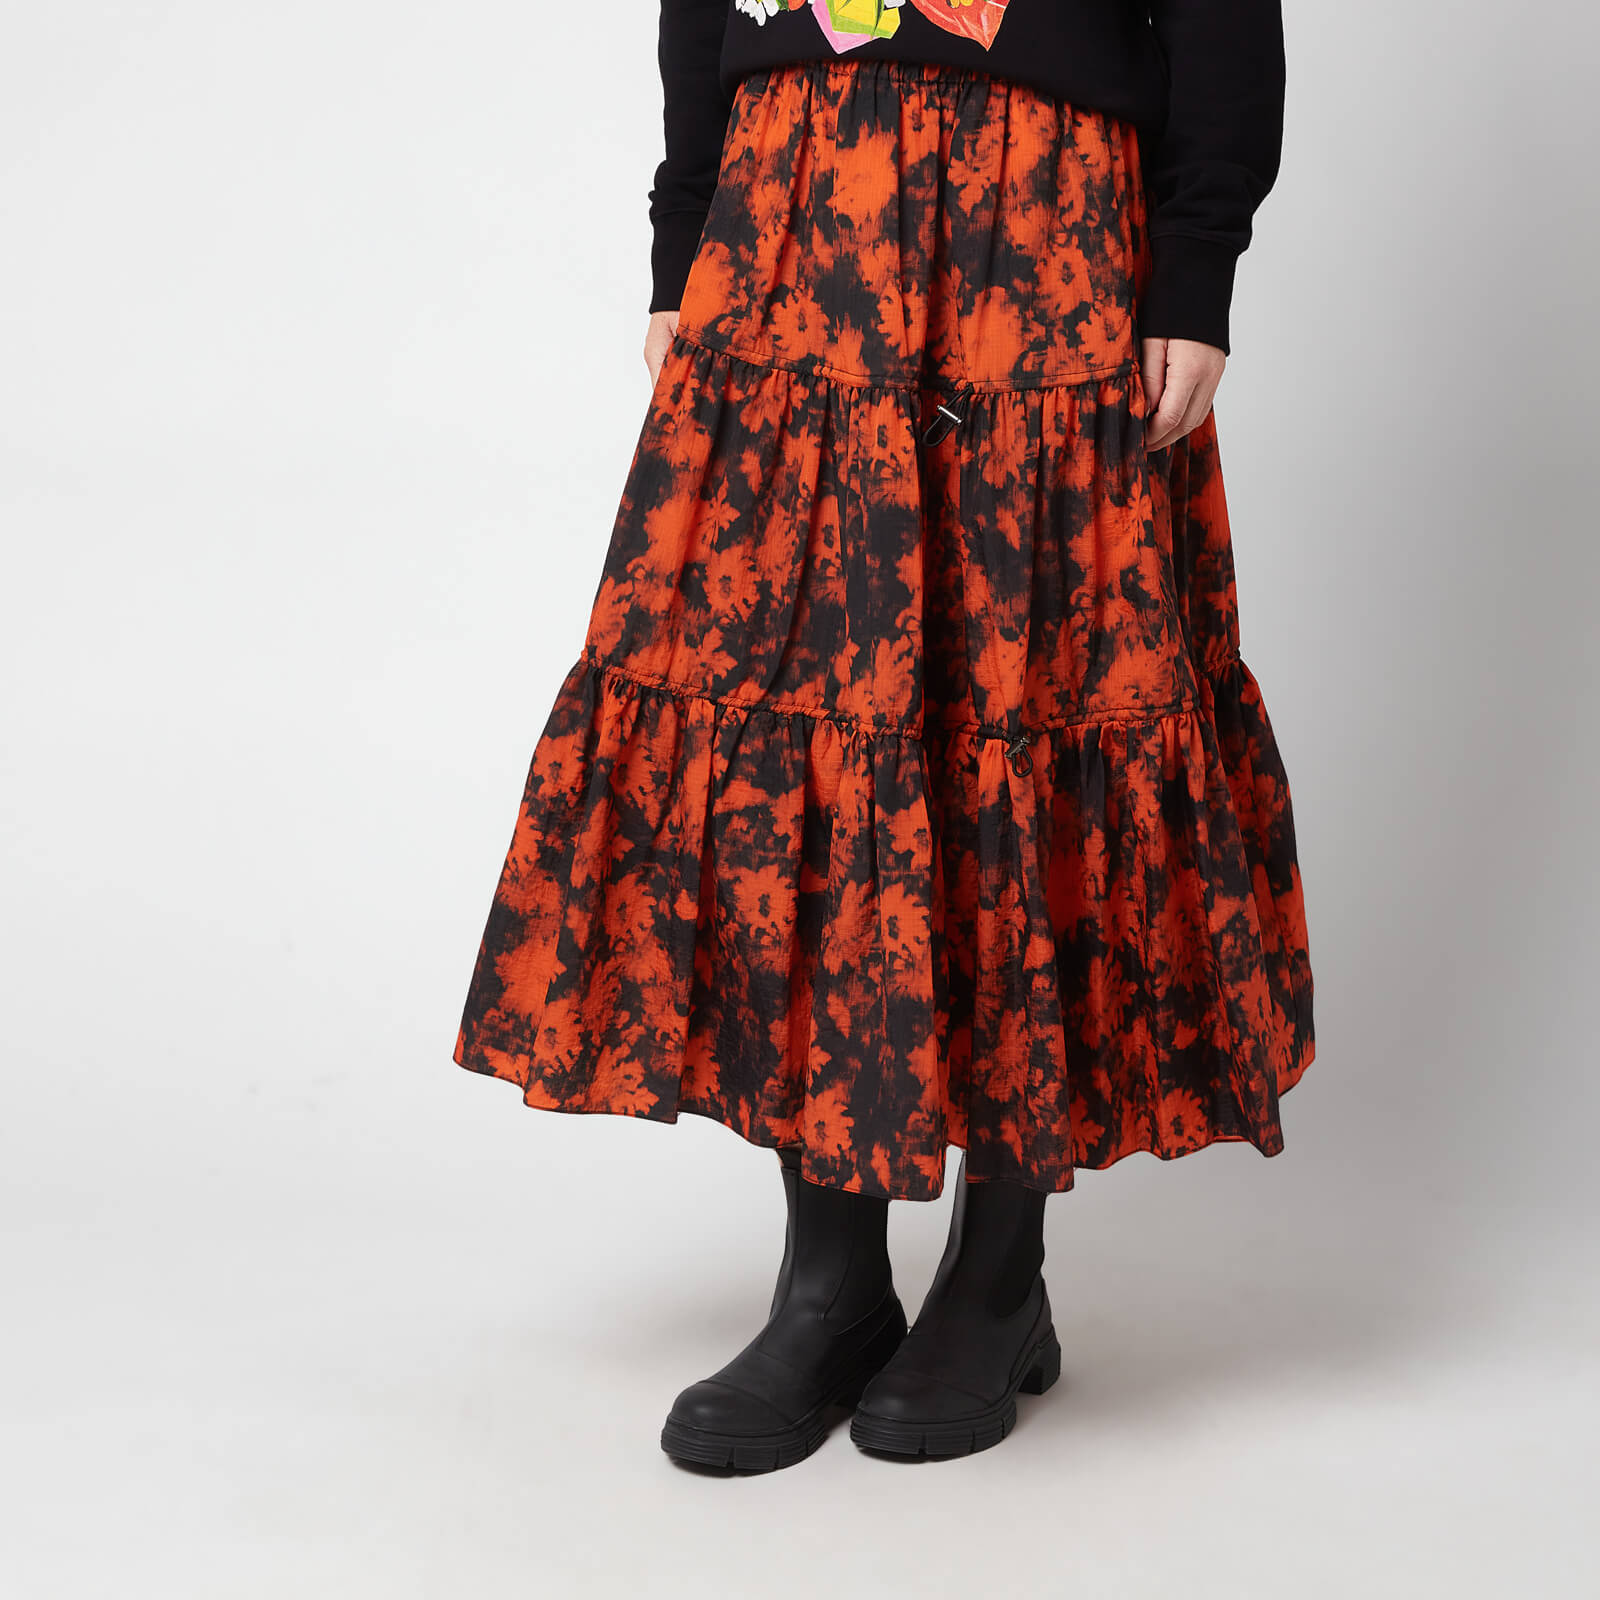 KENZO Women's Printed Elasticated Midi Skirt - Medium Orange - EU36/UK6